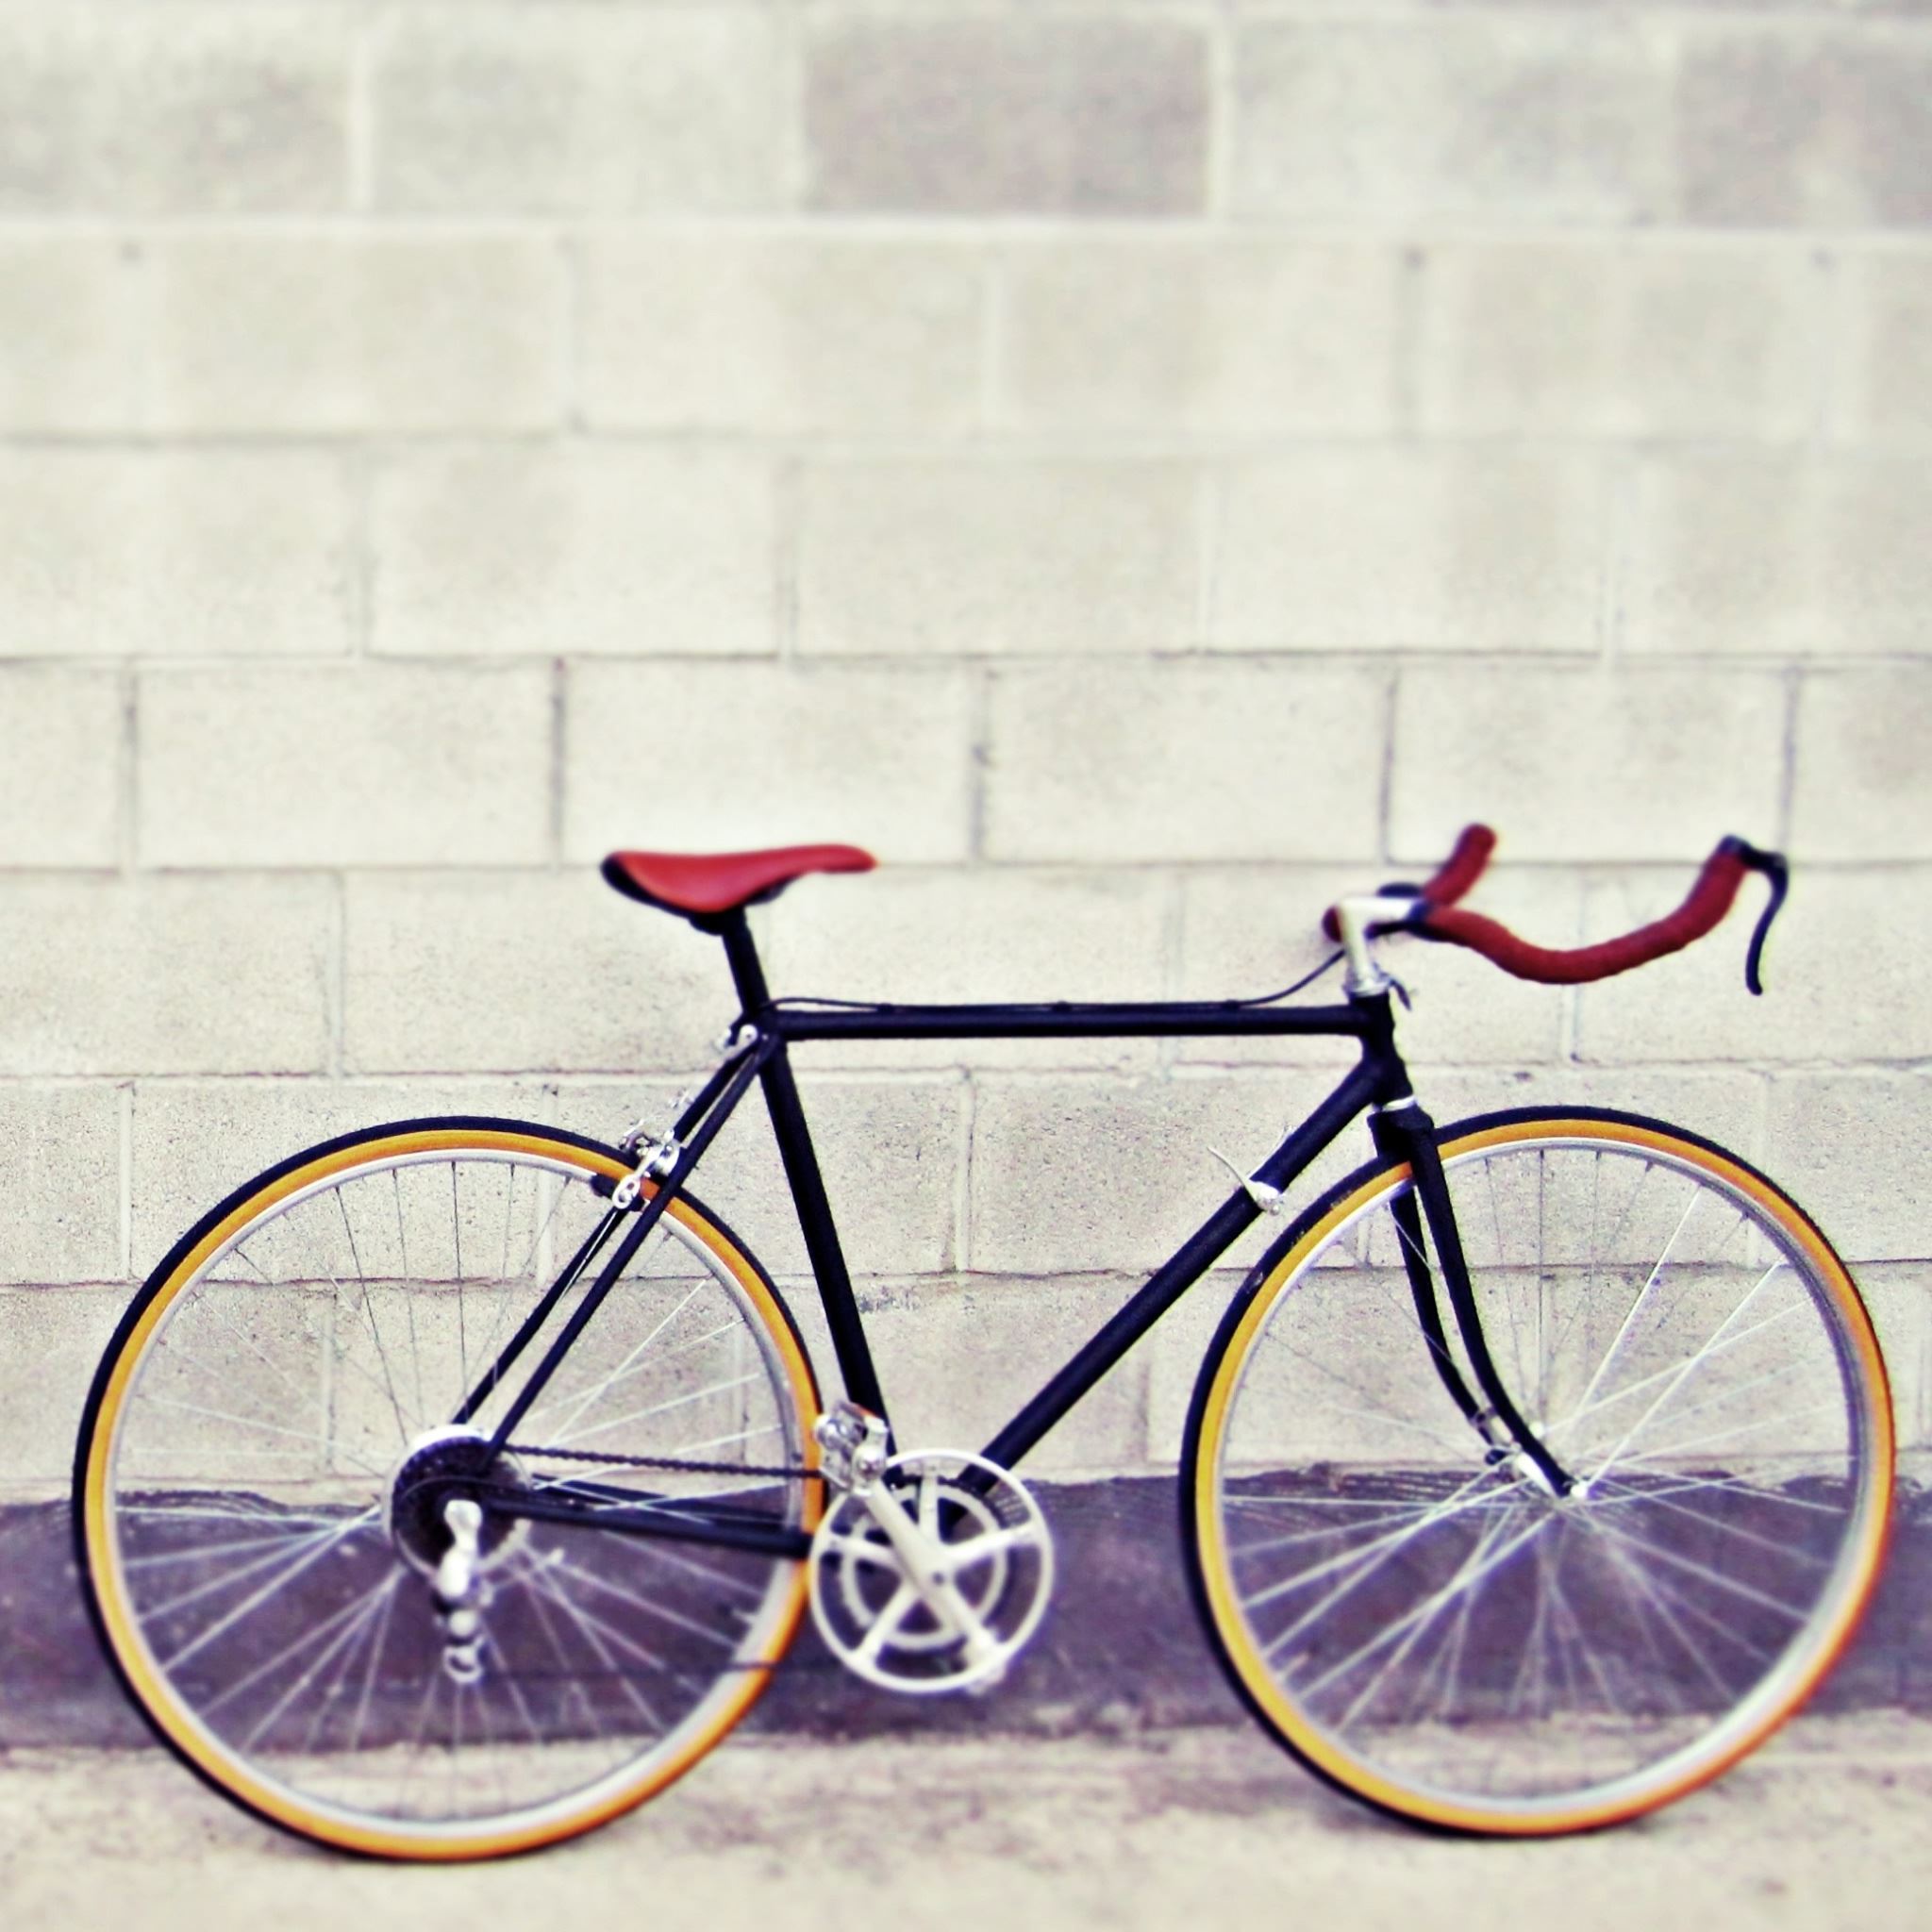 Bicycle 2 iPad Air wallpaper 